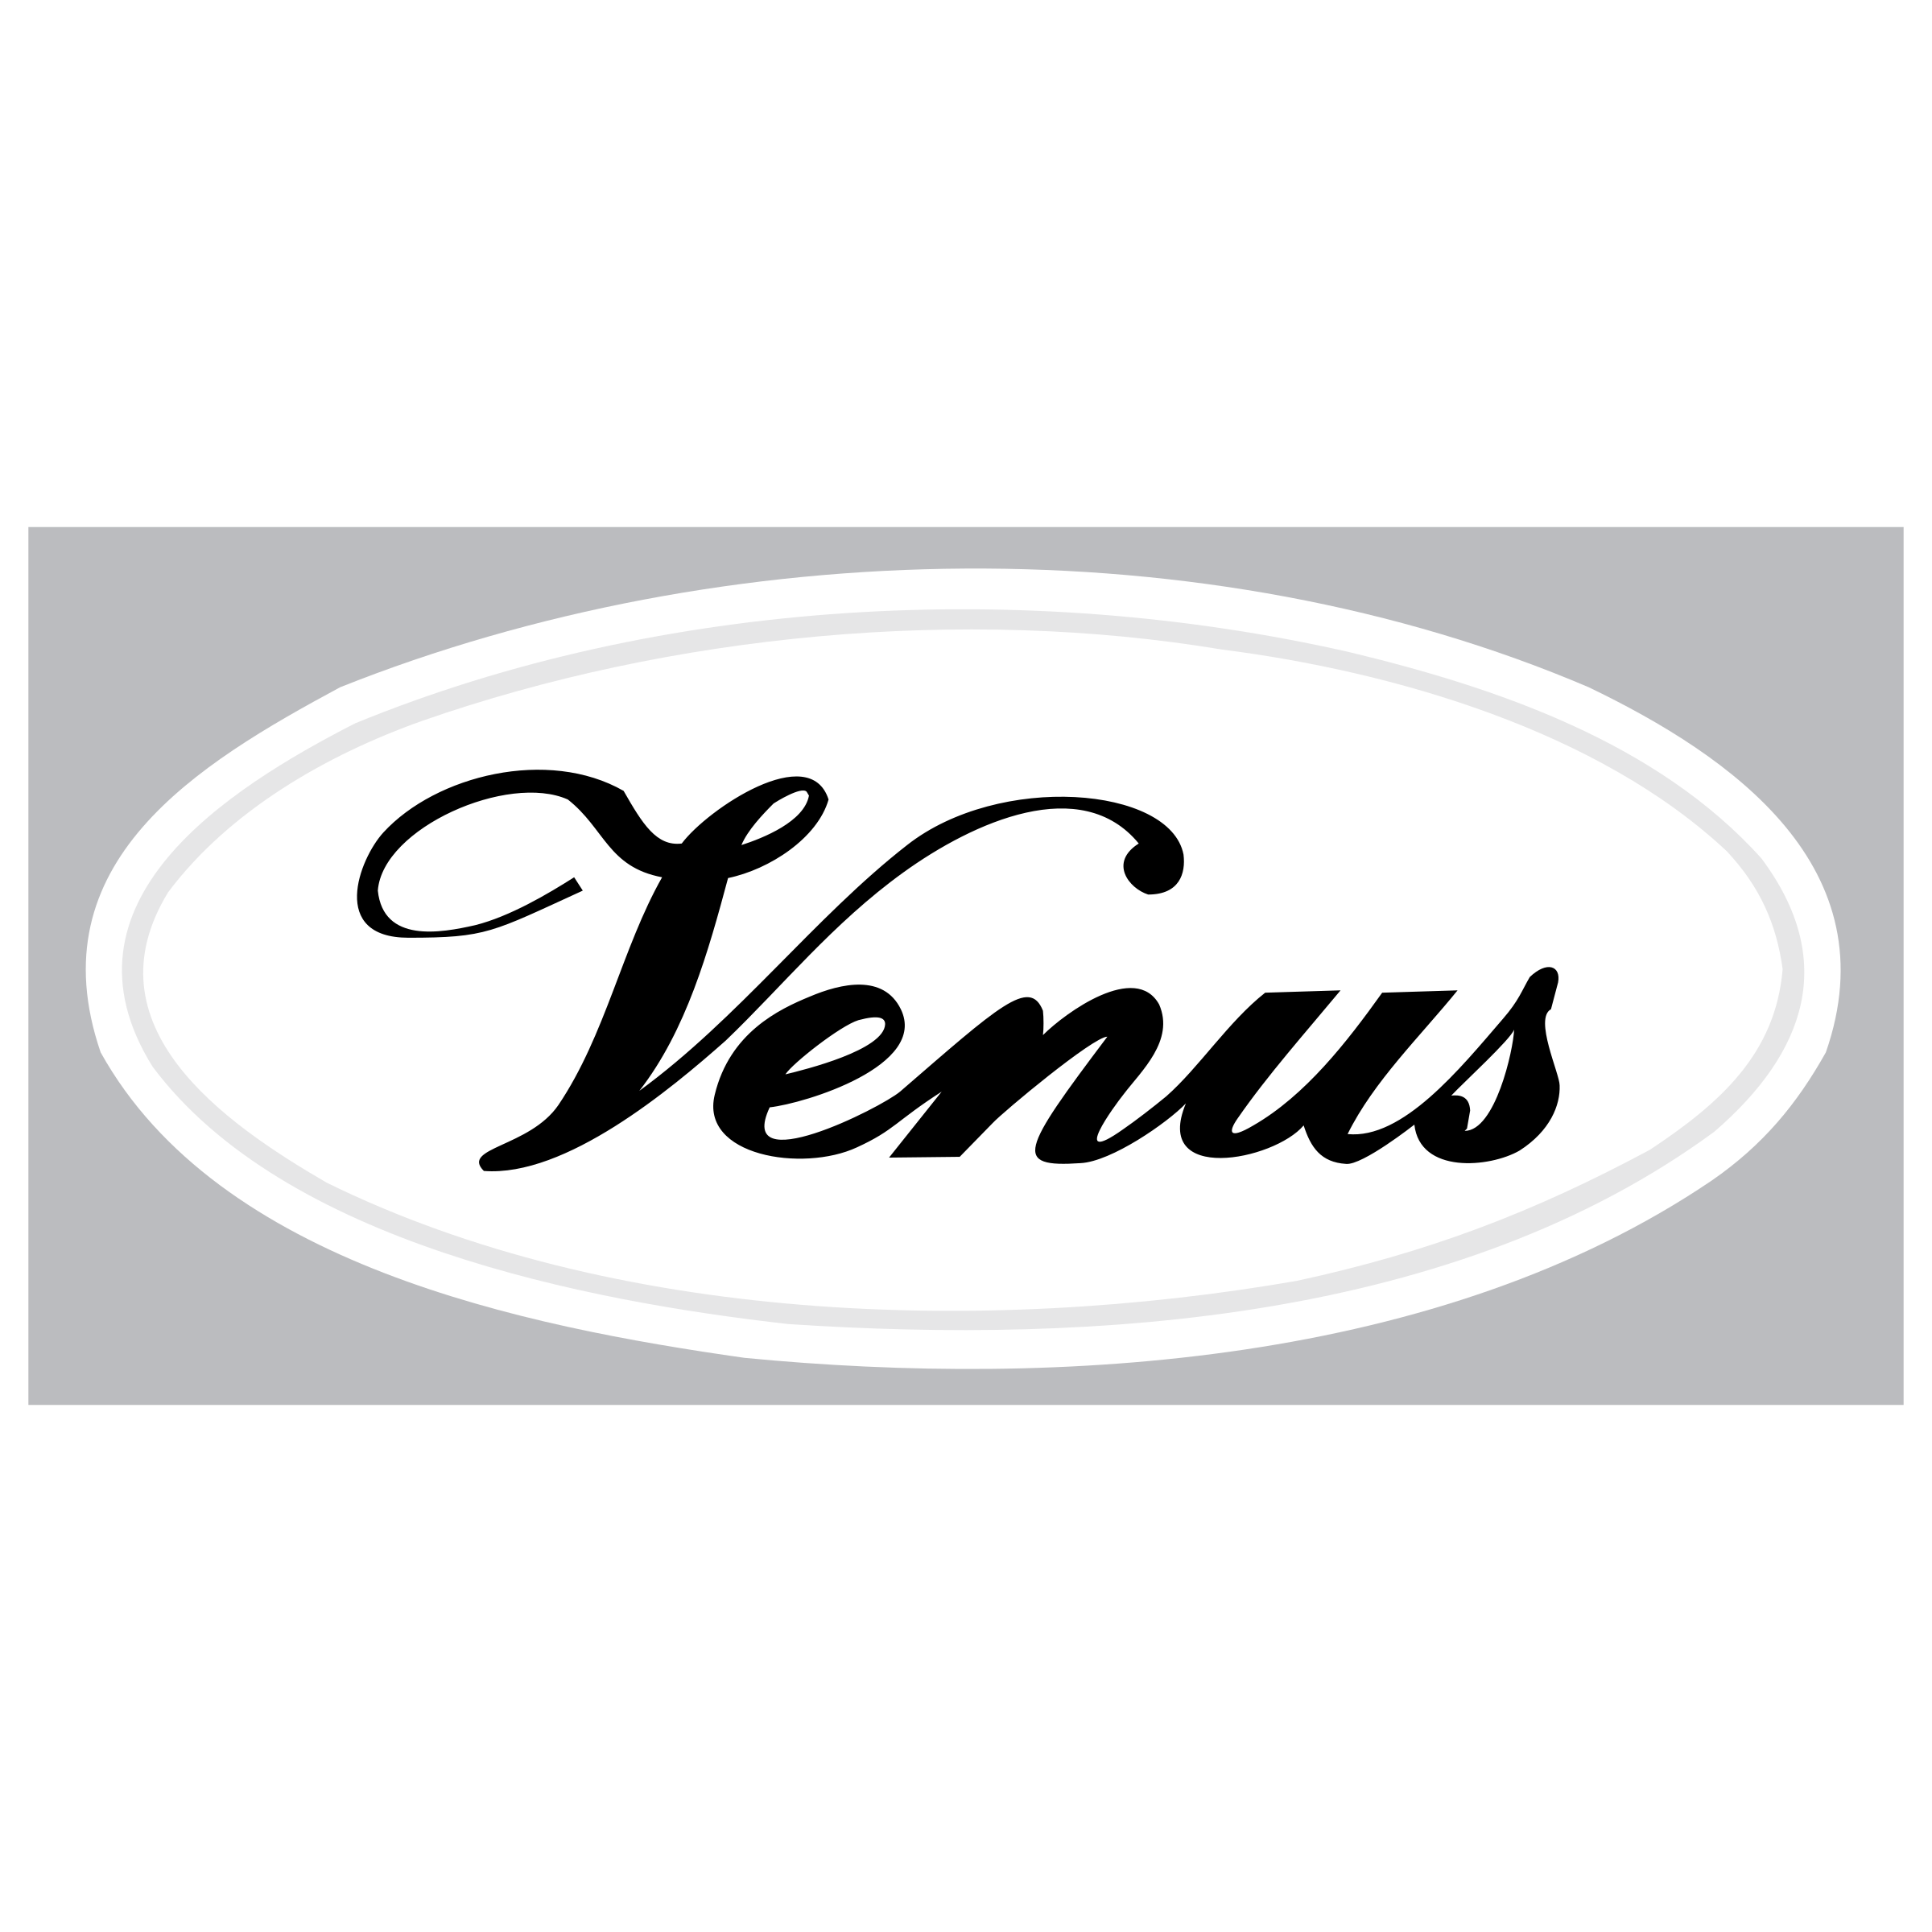 Venus Logo PNG Transparent & SVG Vector.